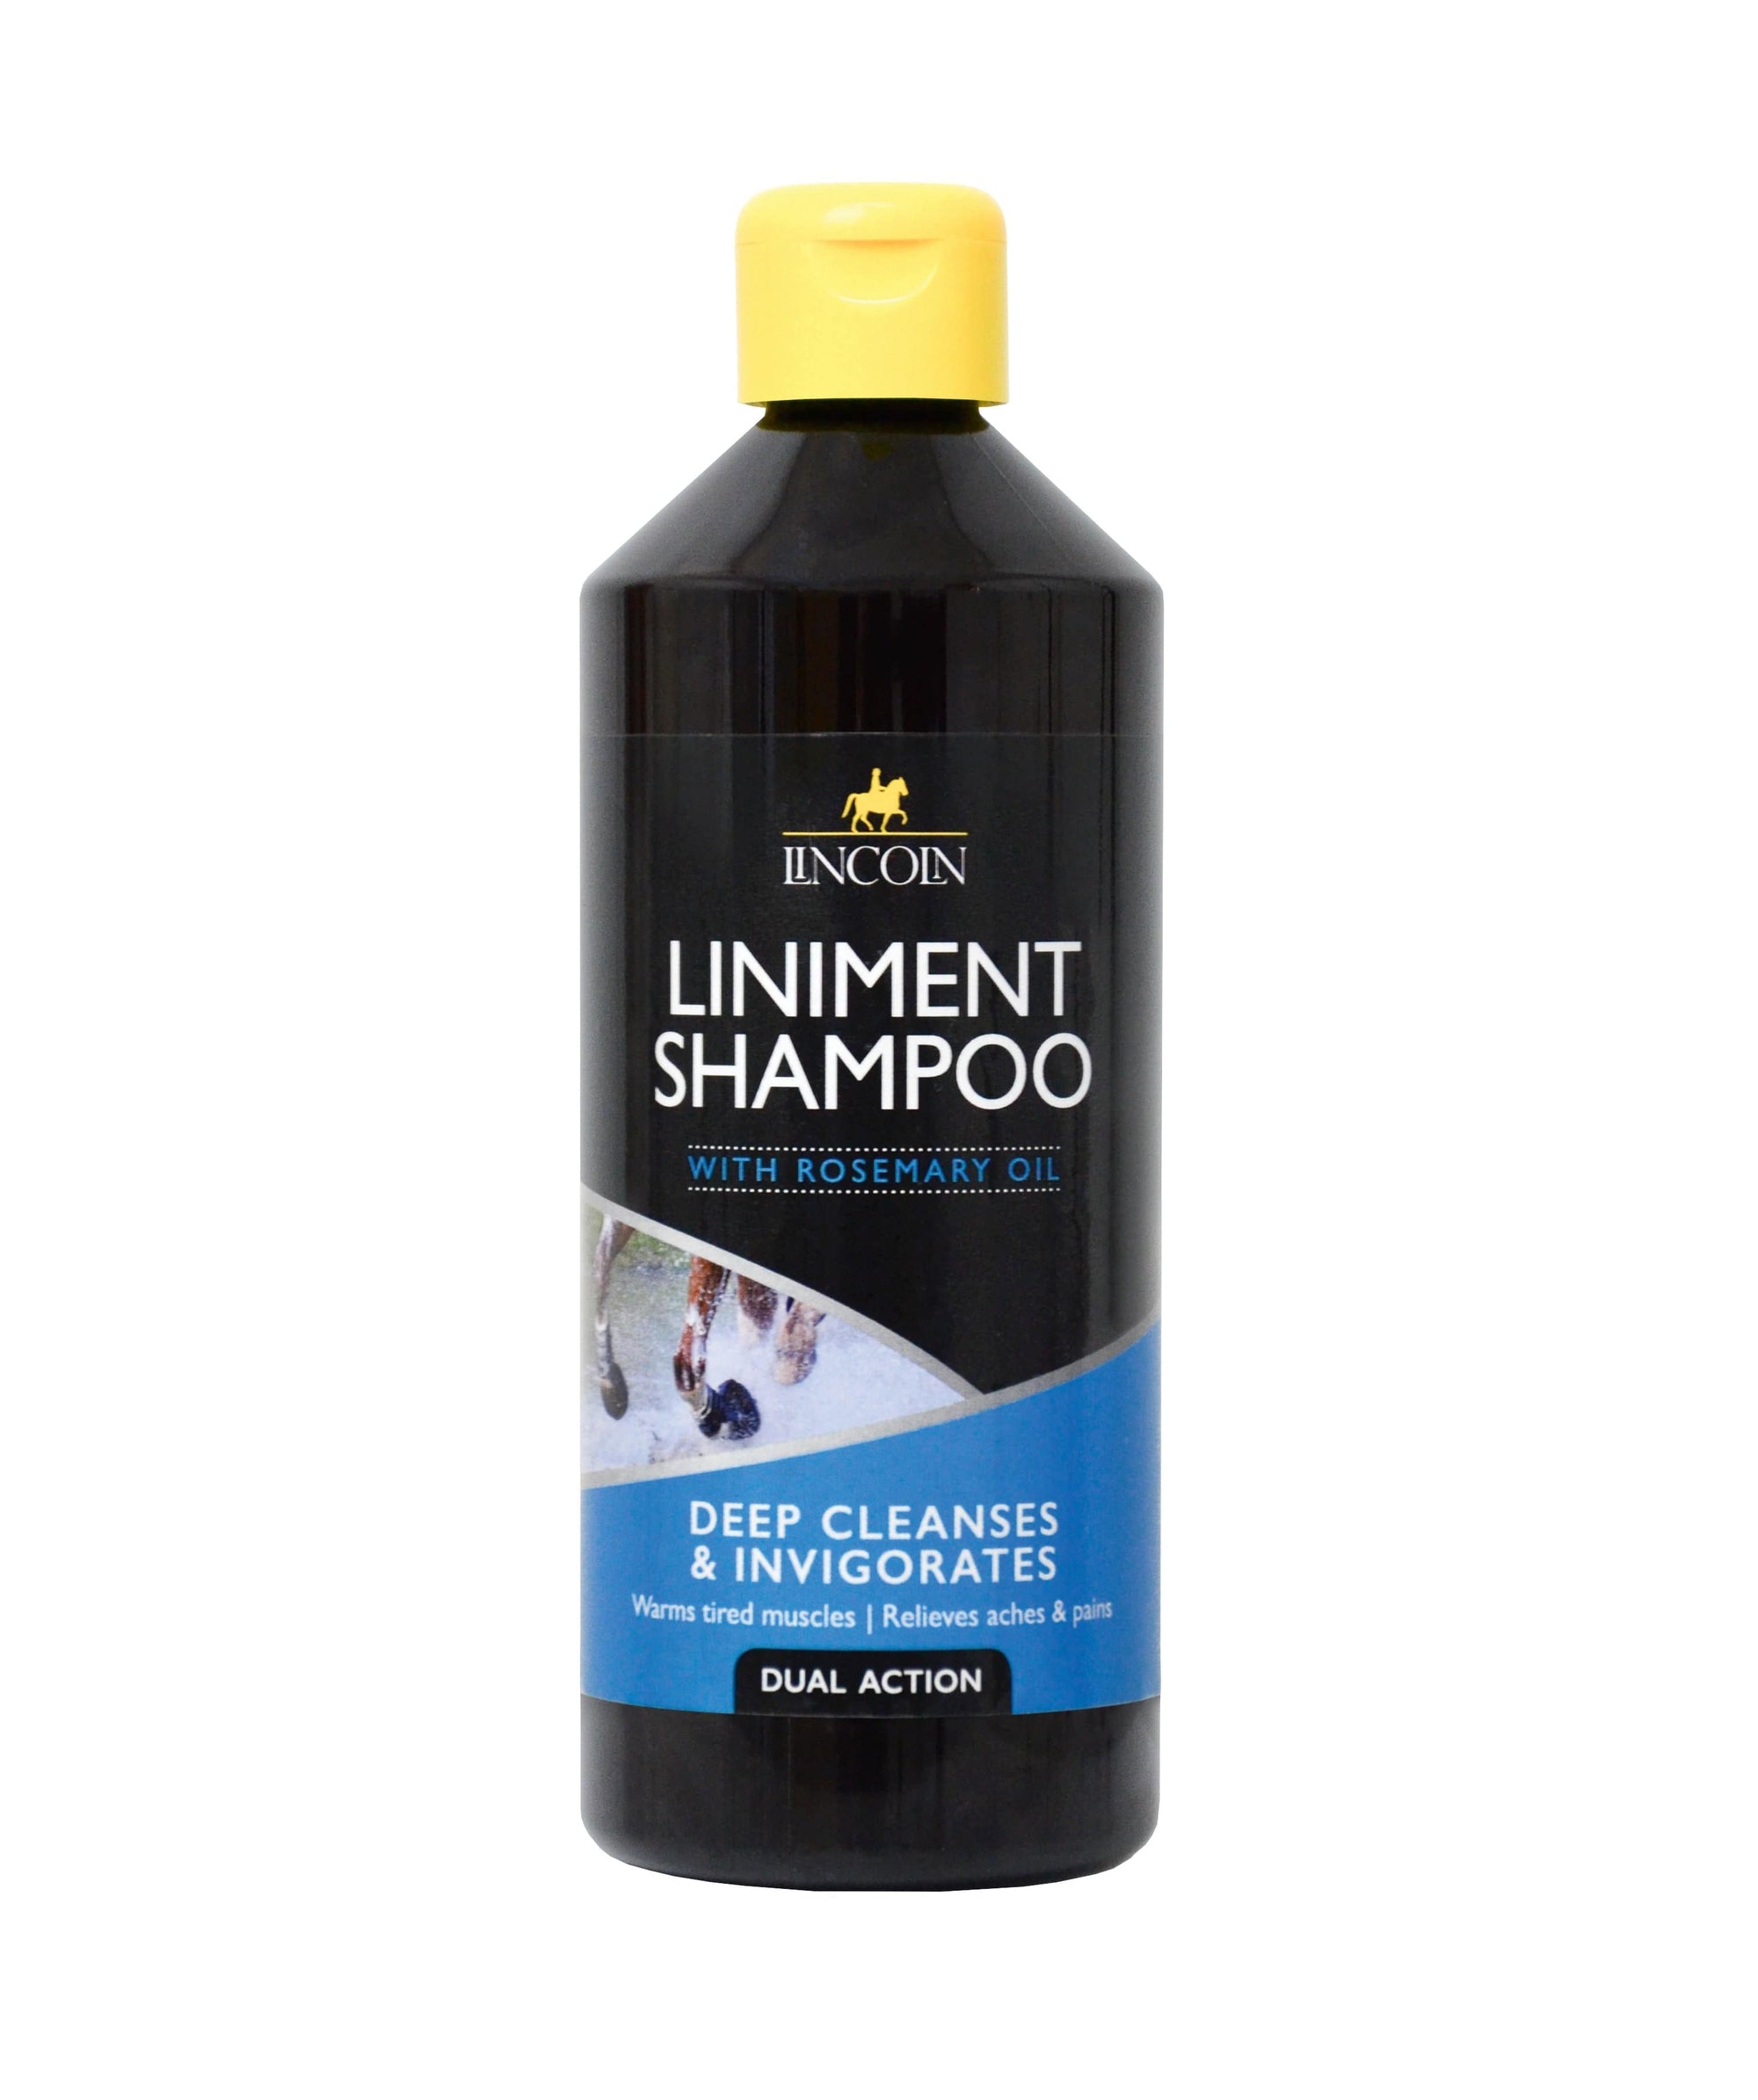 Lincoln liniment shampoo